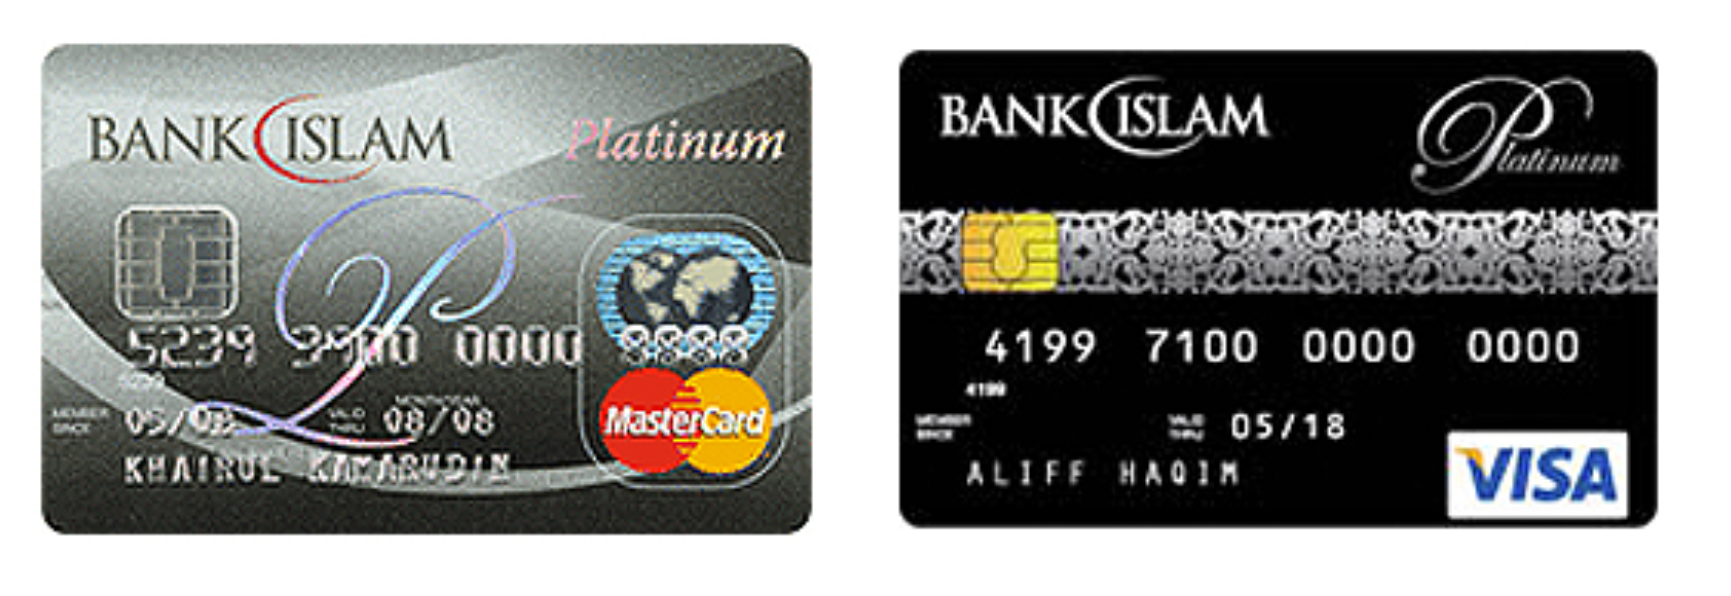 Bank Islam Plantinum Mastercard and Platinum Visa Credit Card for halal transactions